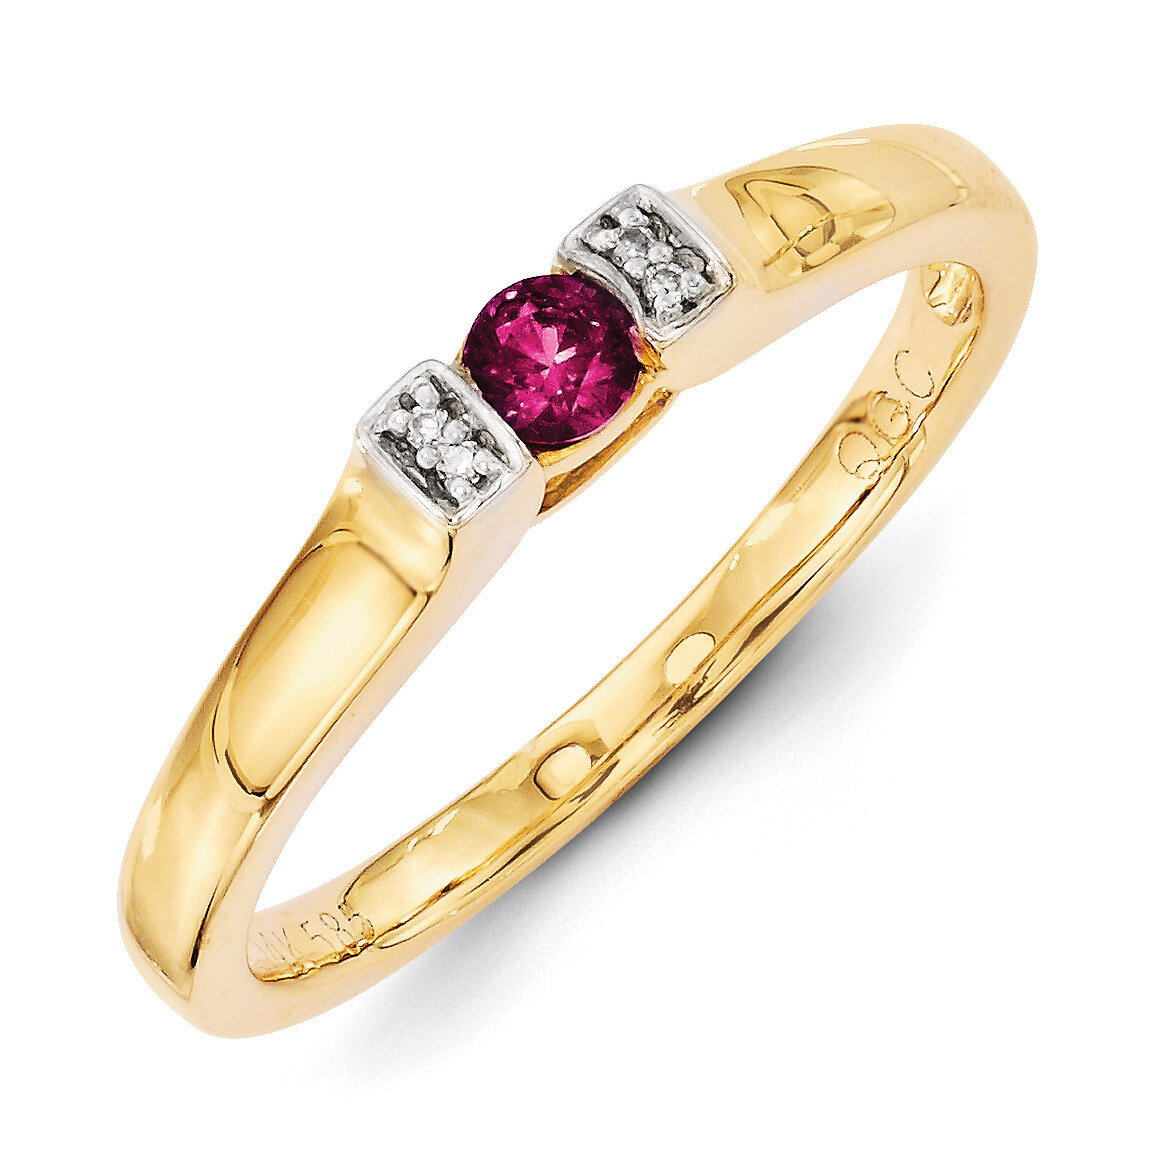 1 Birthstone Family Jewelry Diamond Semi-Set Ring 14k Yellow Gold XMR35/1